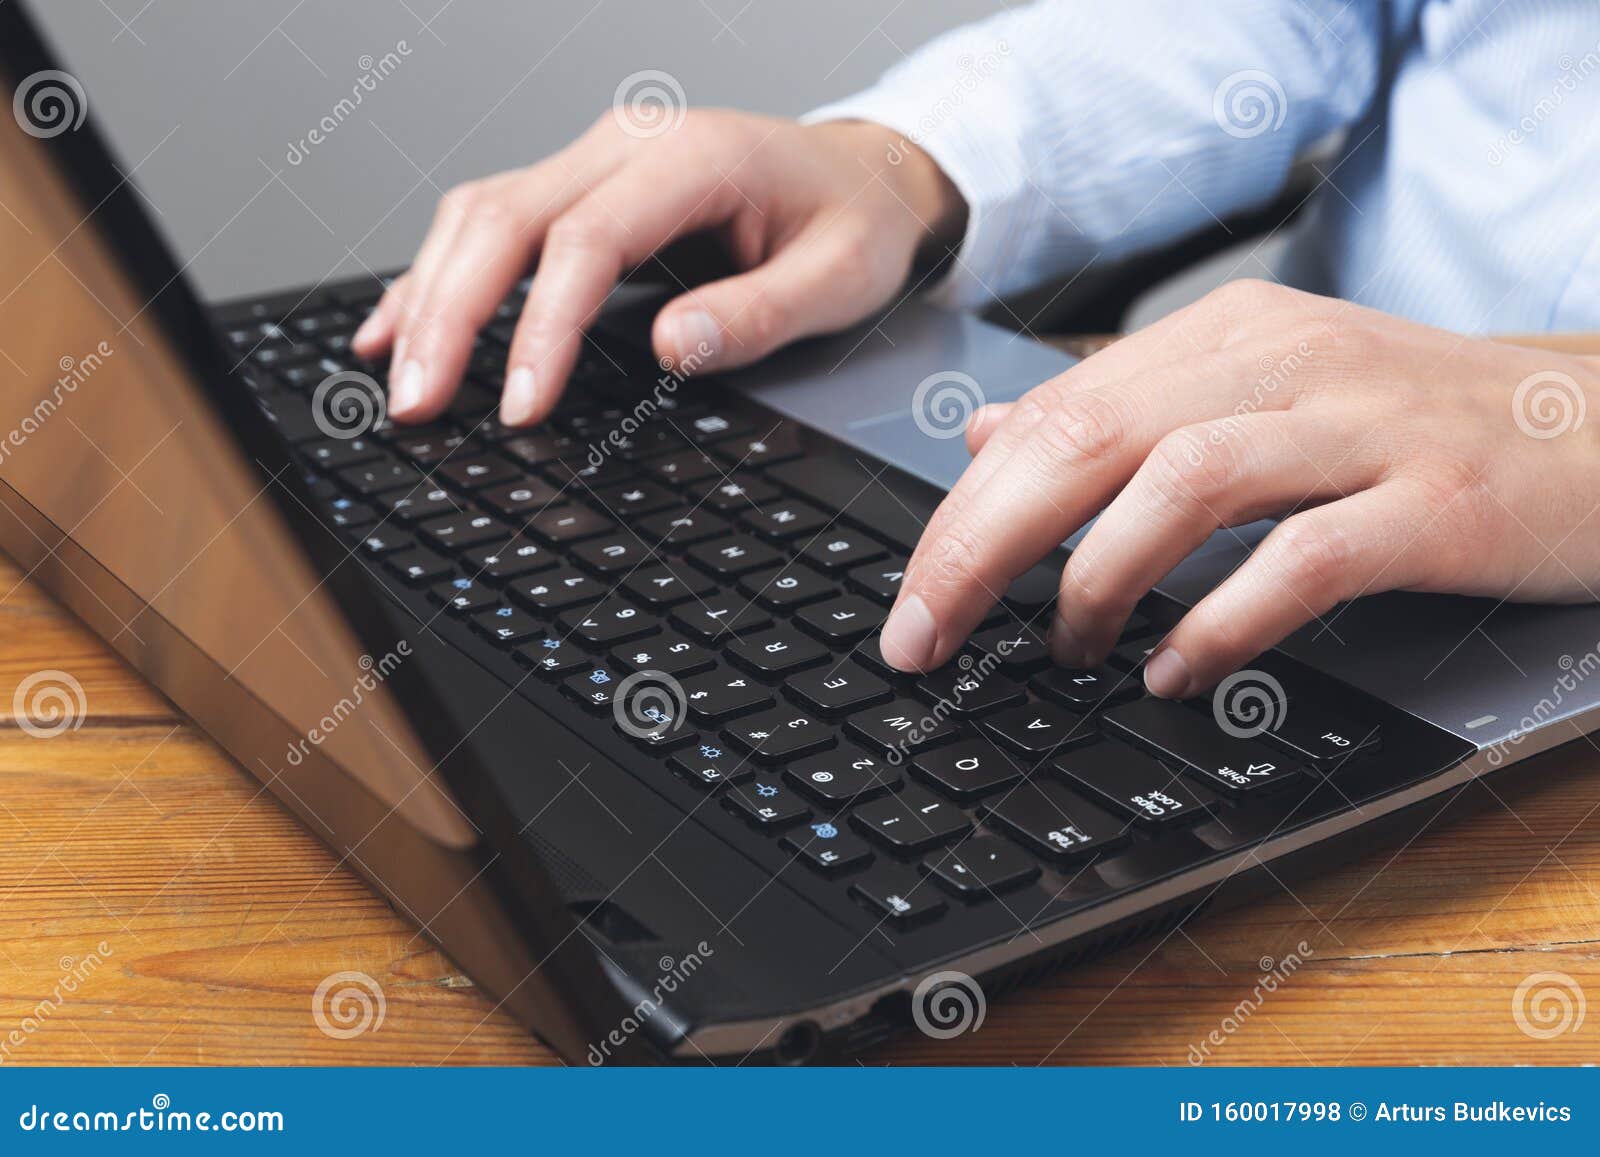 businesswoman`s hands typing on laptop keybord